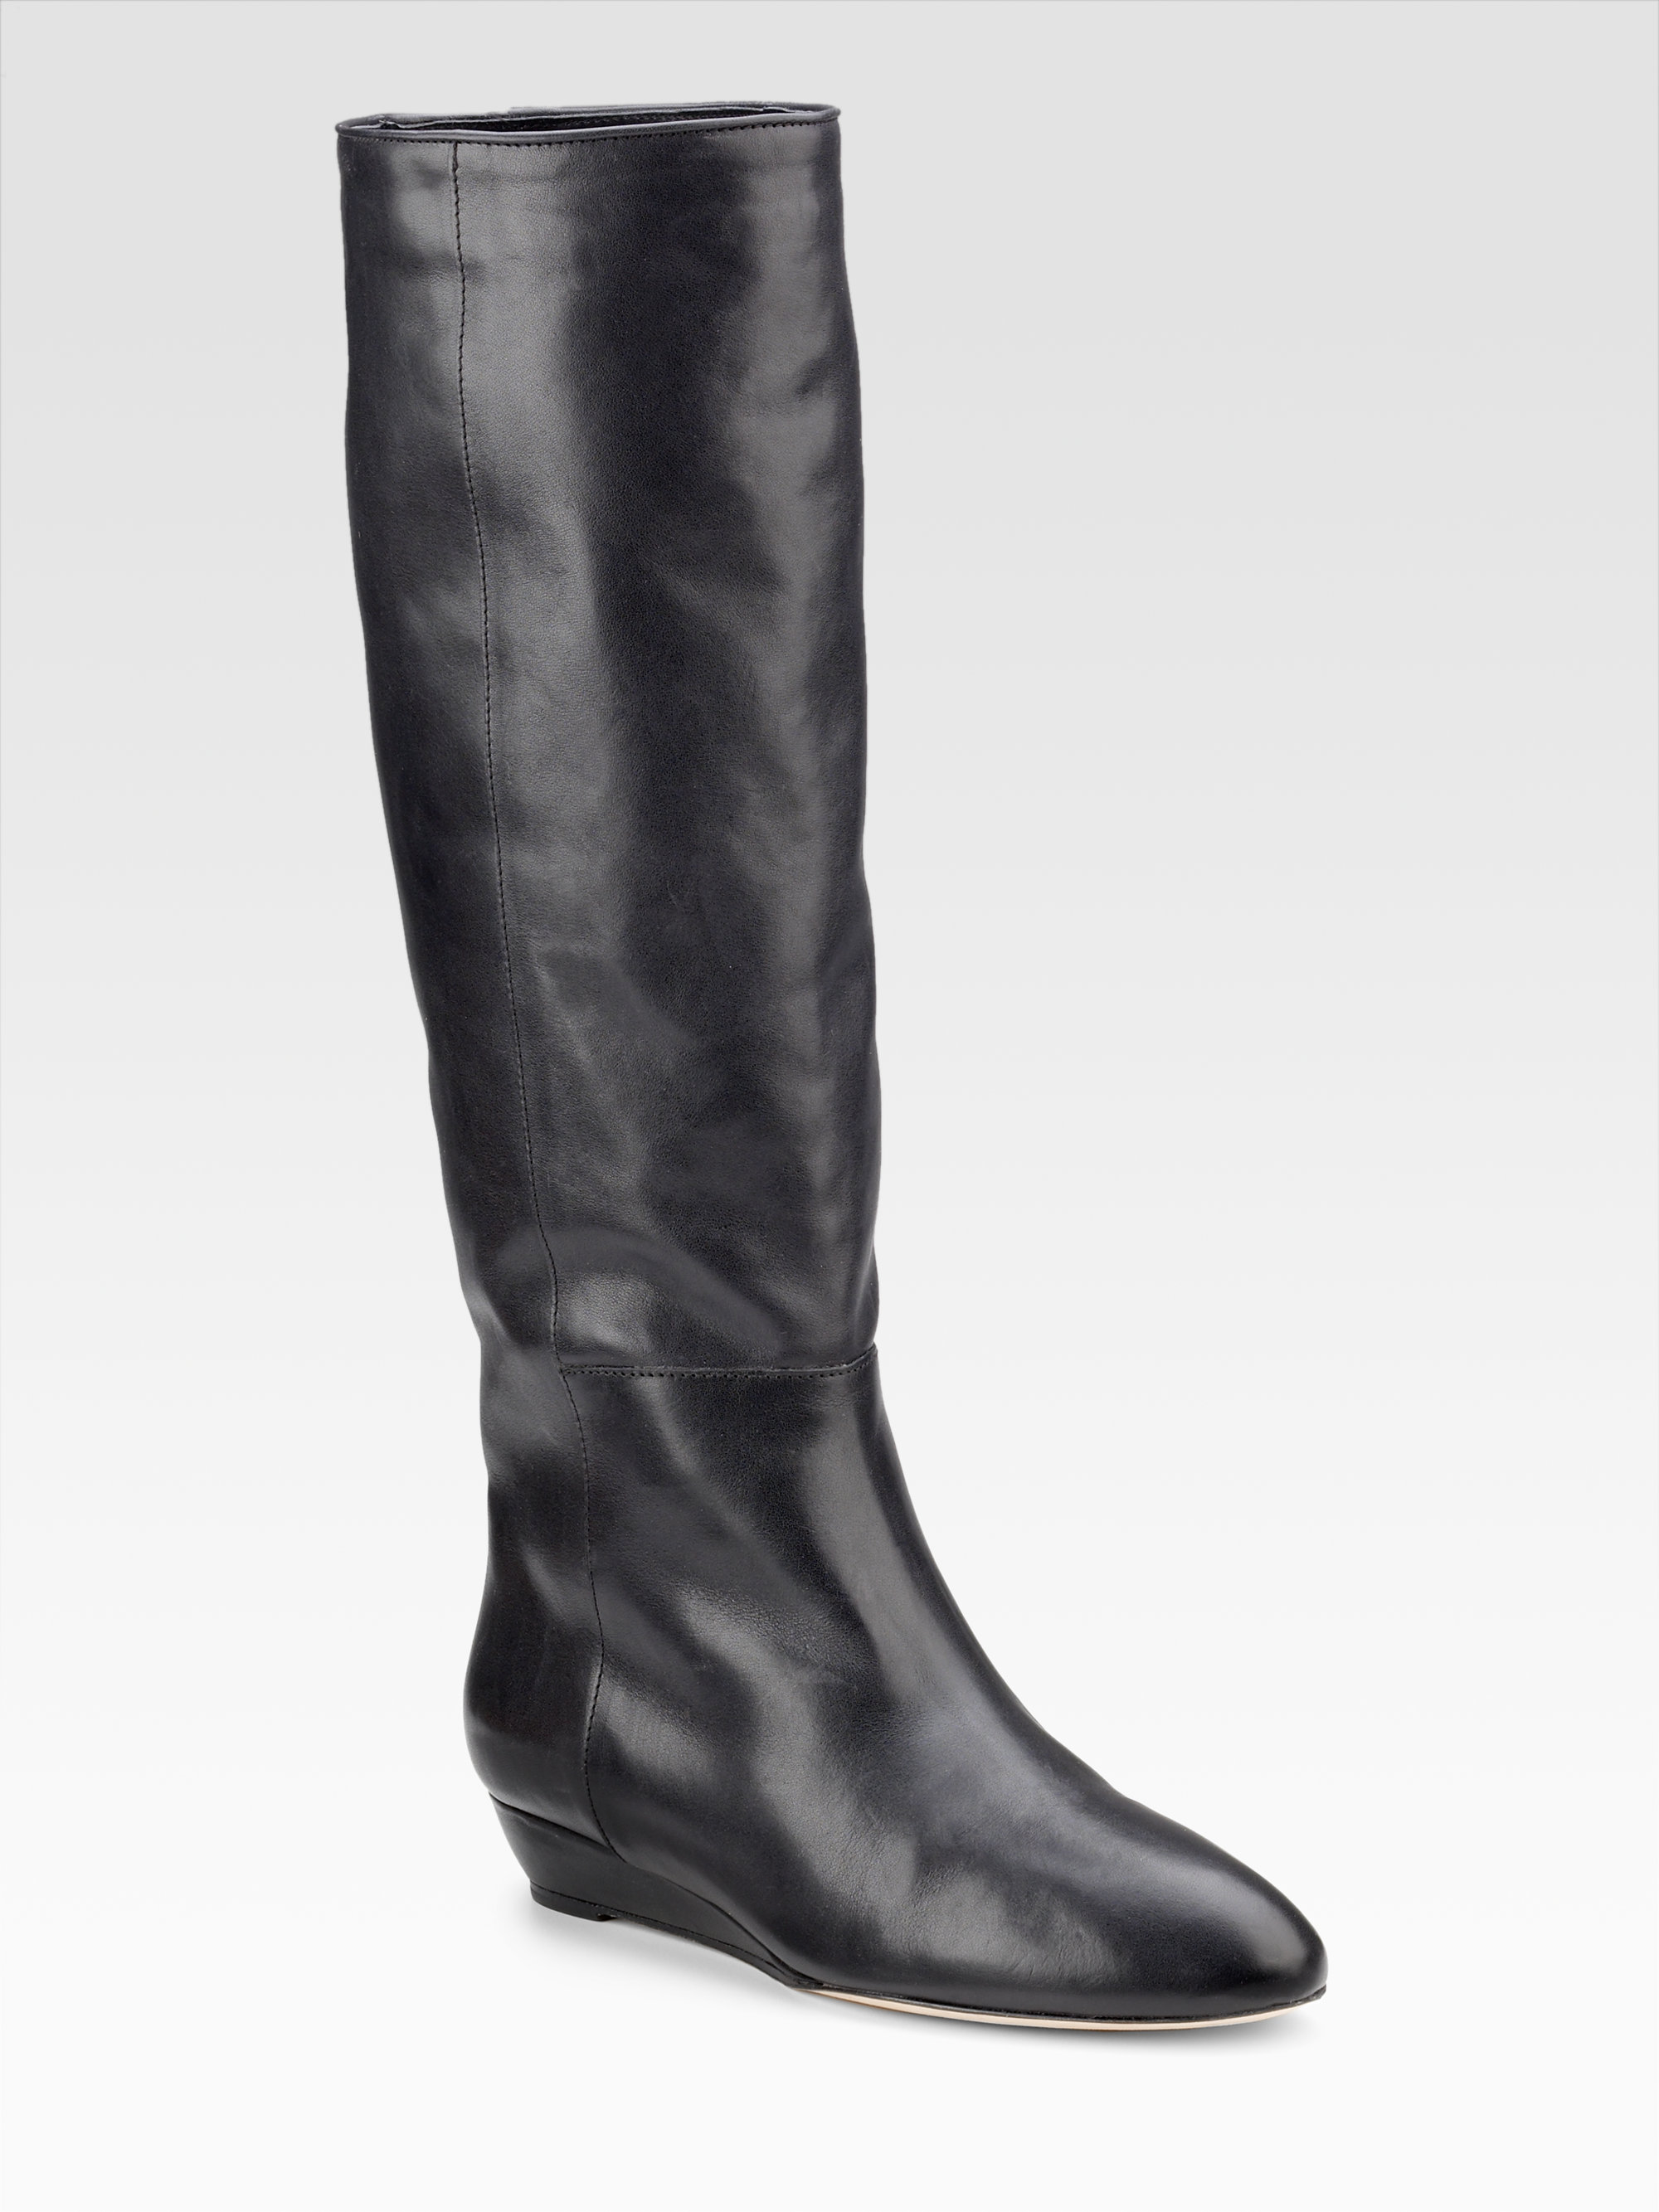 Loeffler Randall Classic Flat Knee-high Boots in Black | Lyst